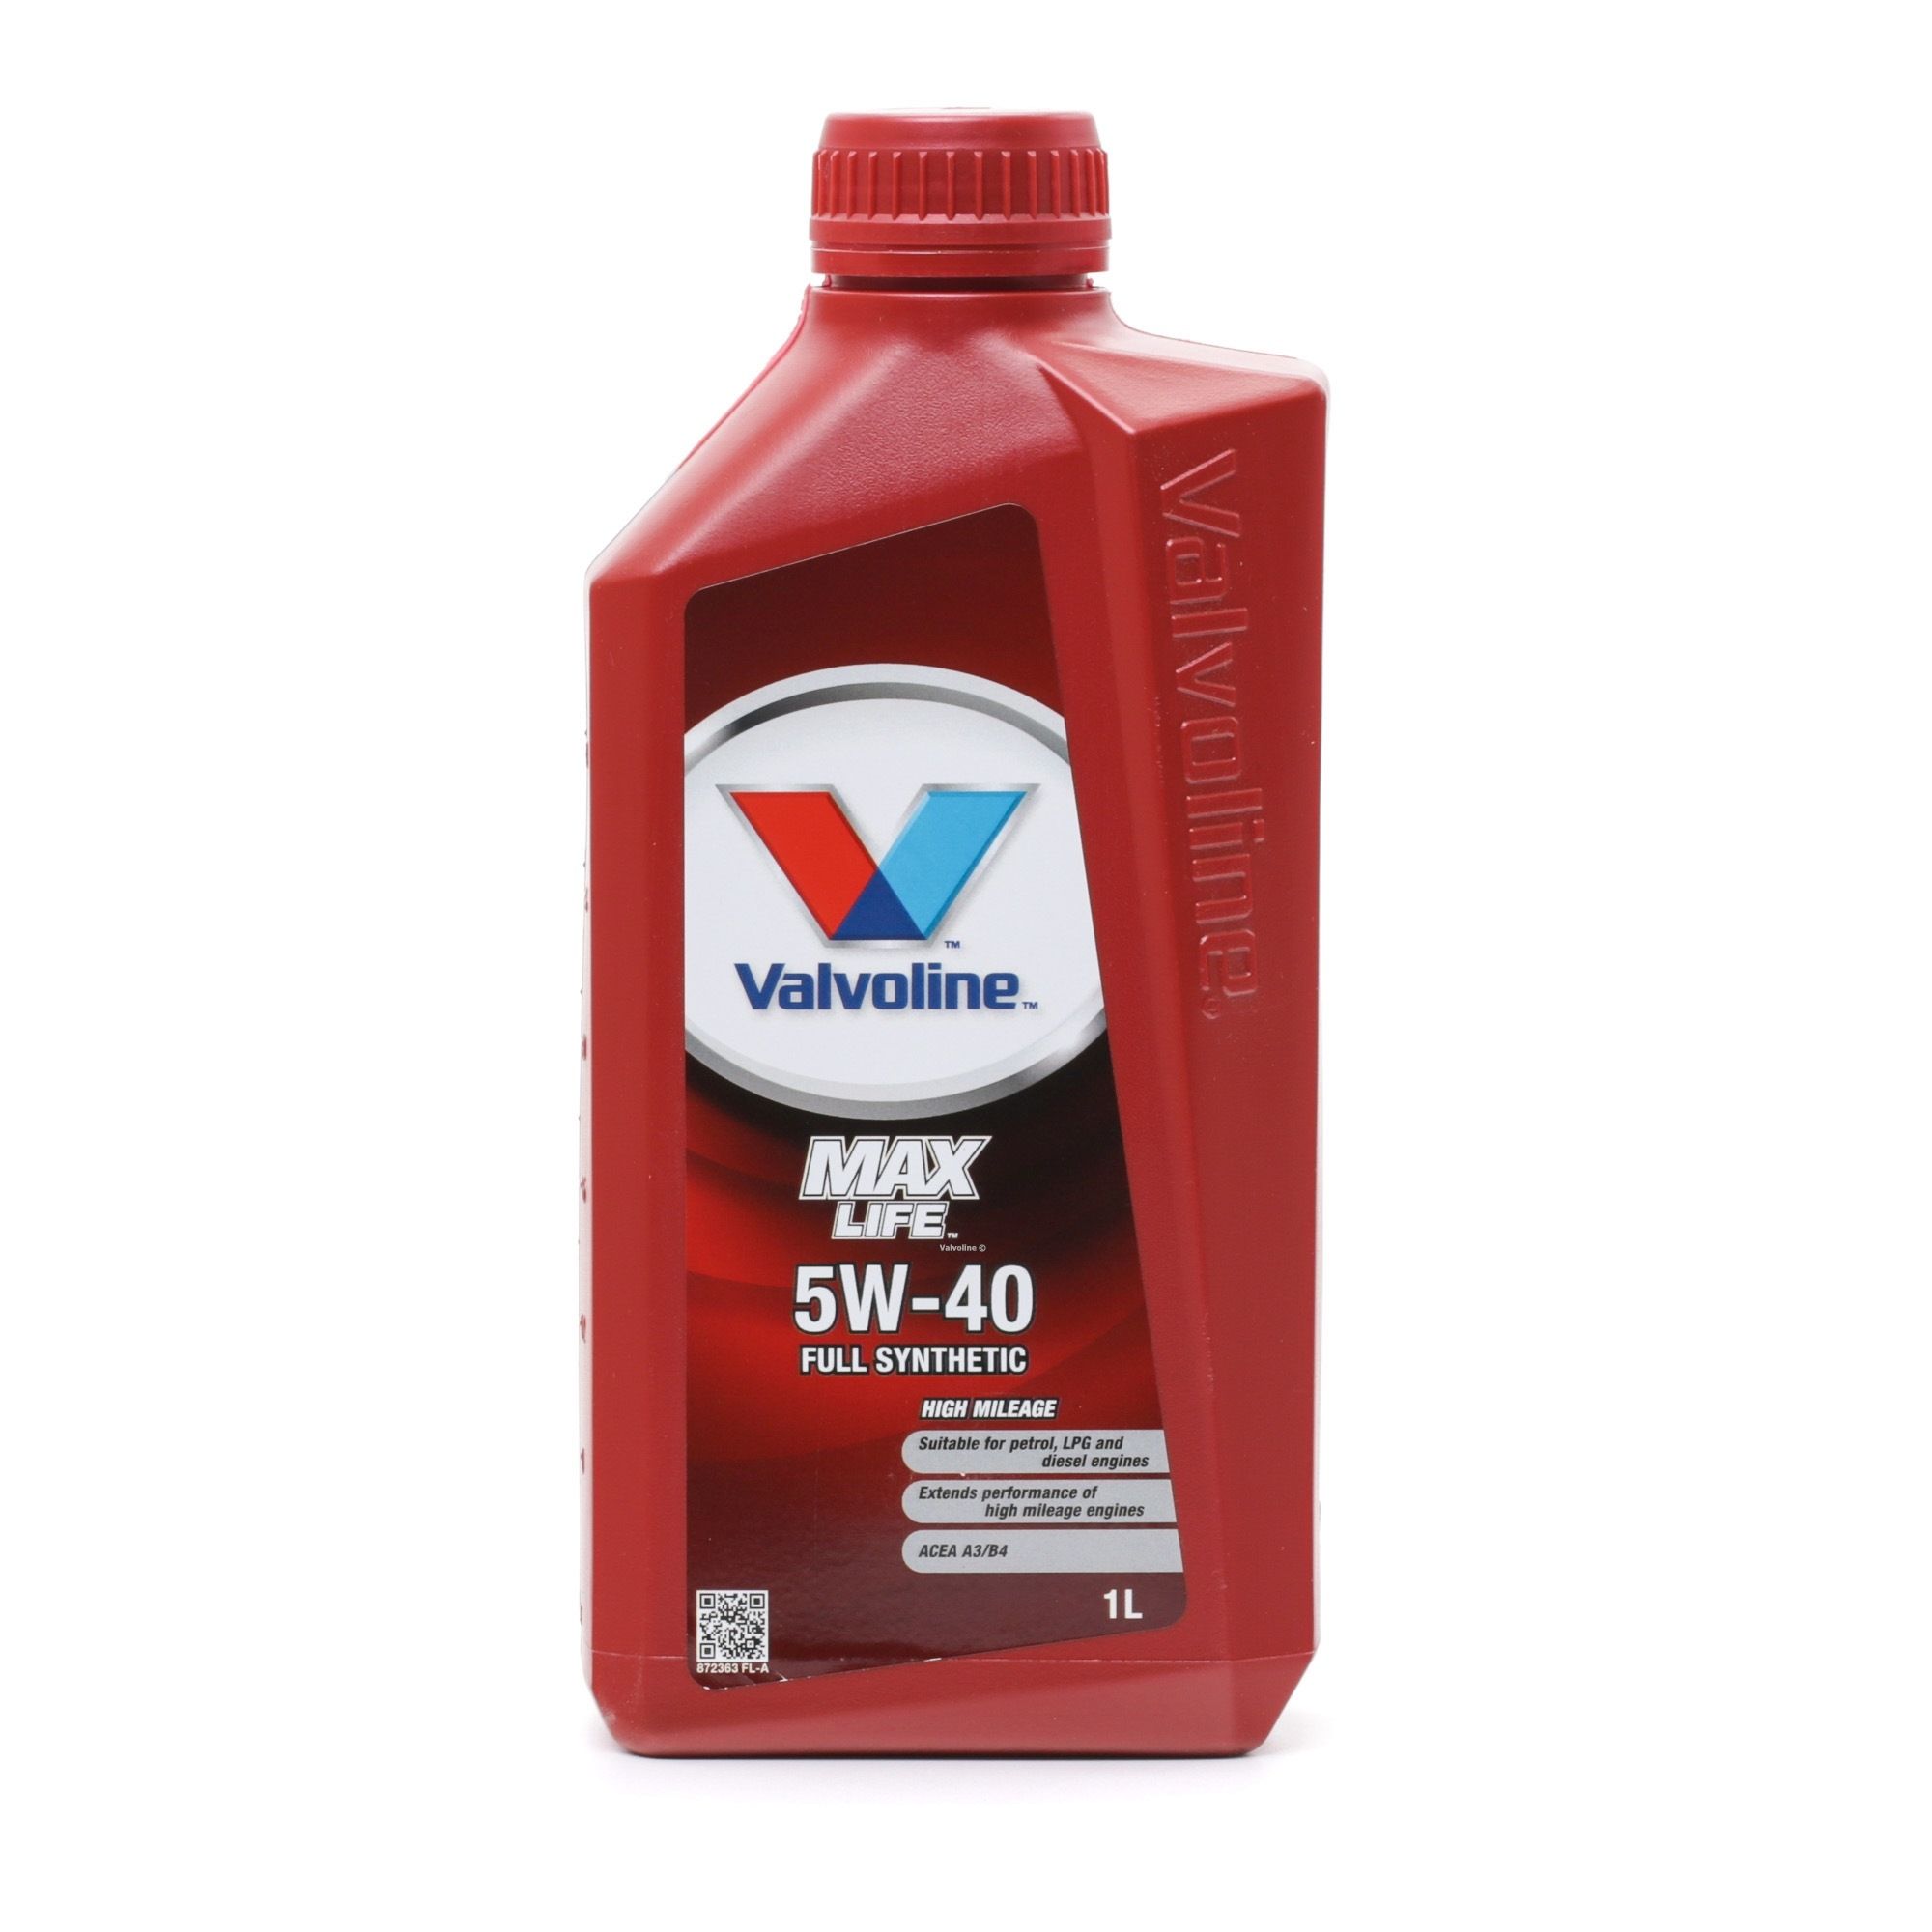 Valvoline MaxLife 872363 Engine oil 5W-40, 1l, Synthetic Oil